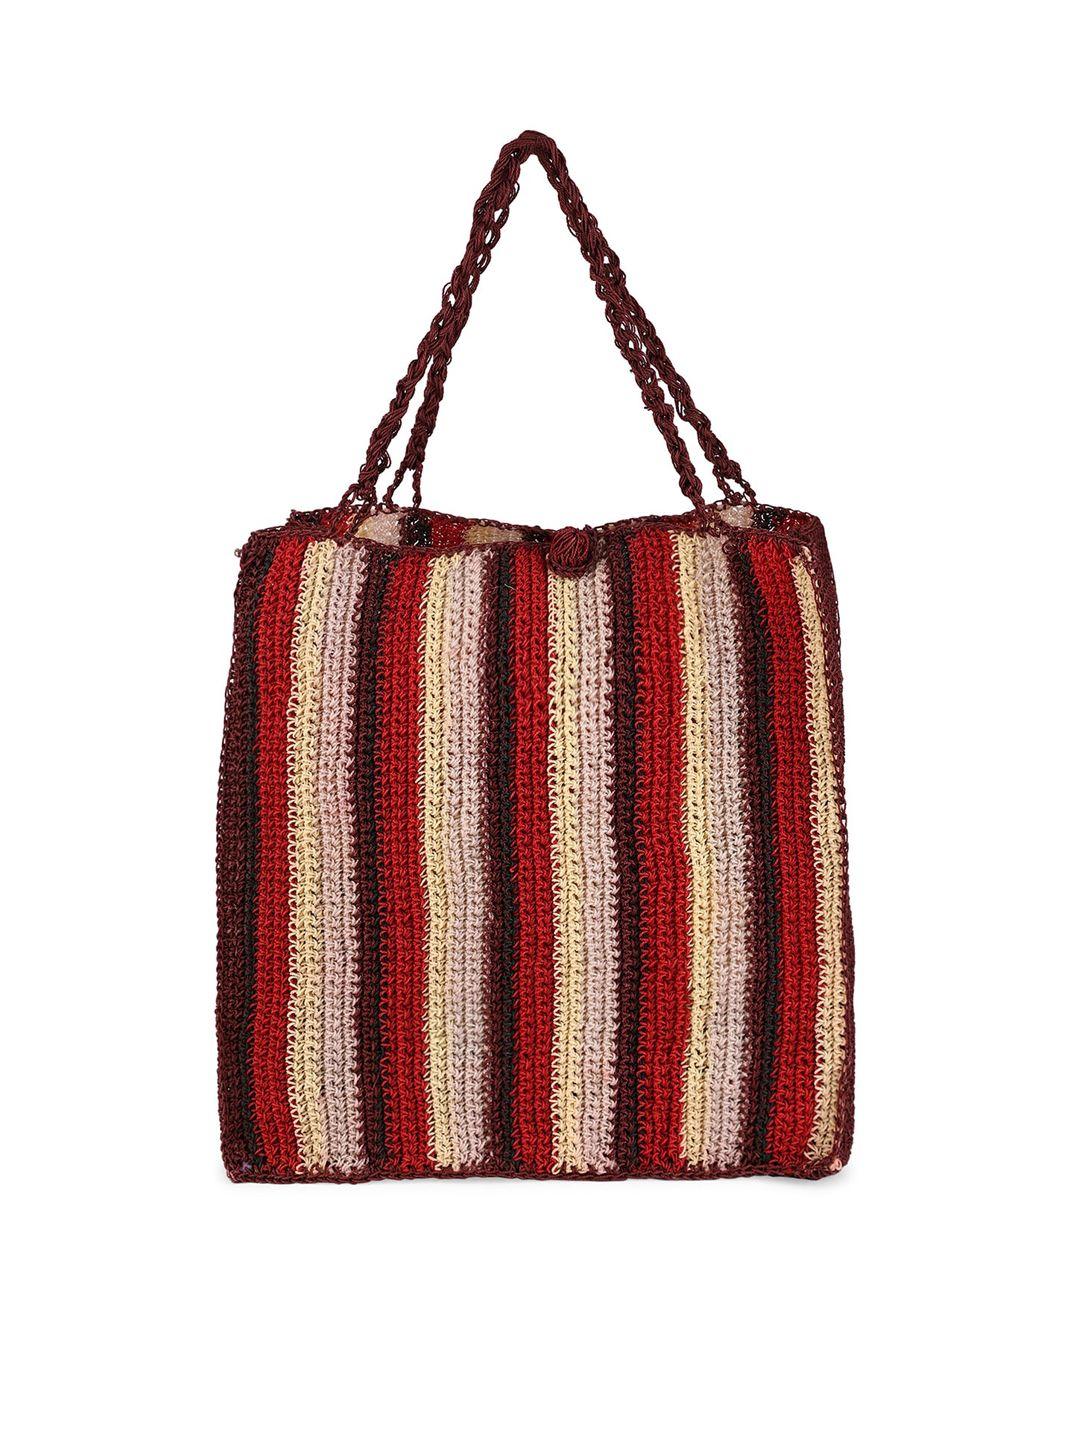 rediscover fashion striped shopper tote bag